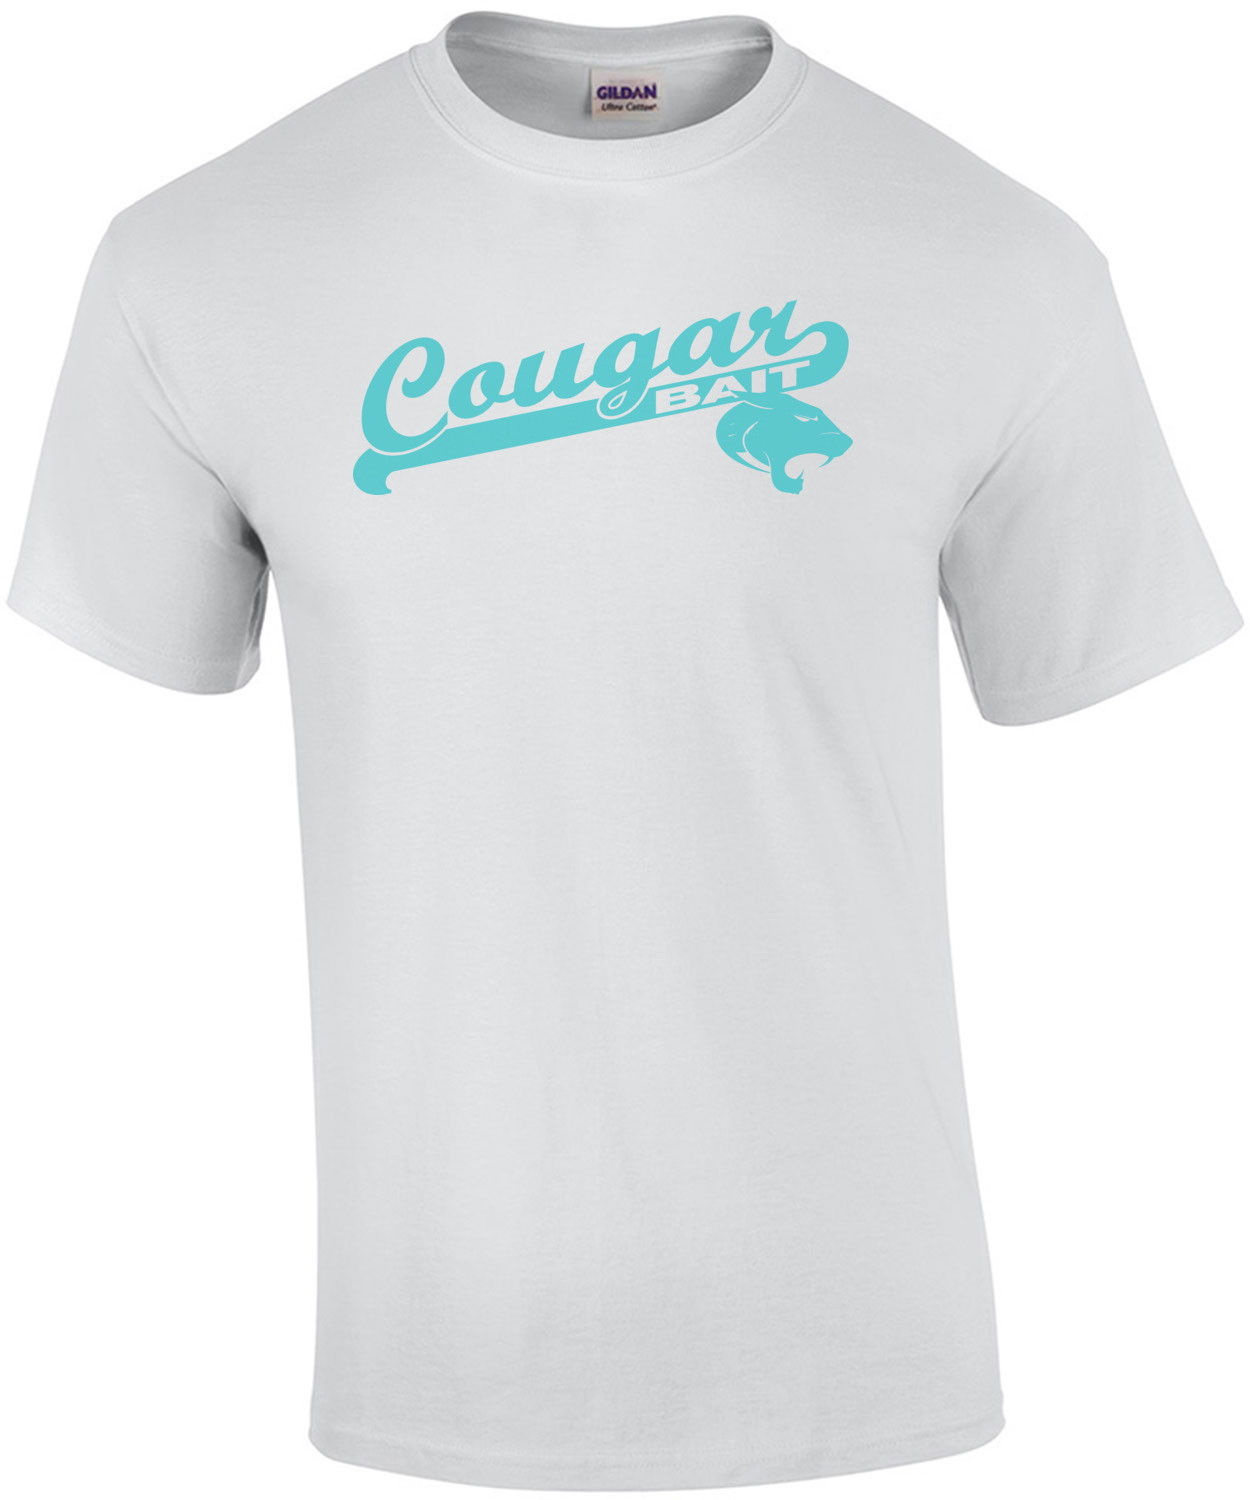 Cougar Bait T-shirt 